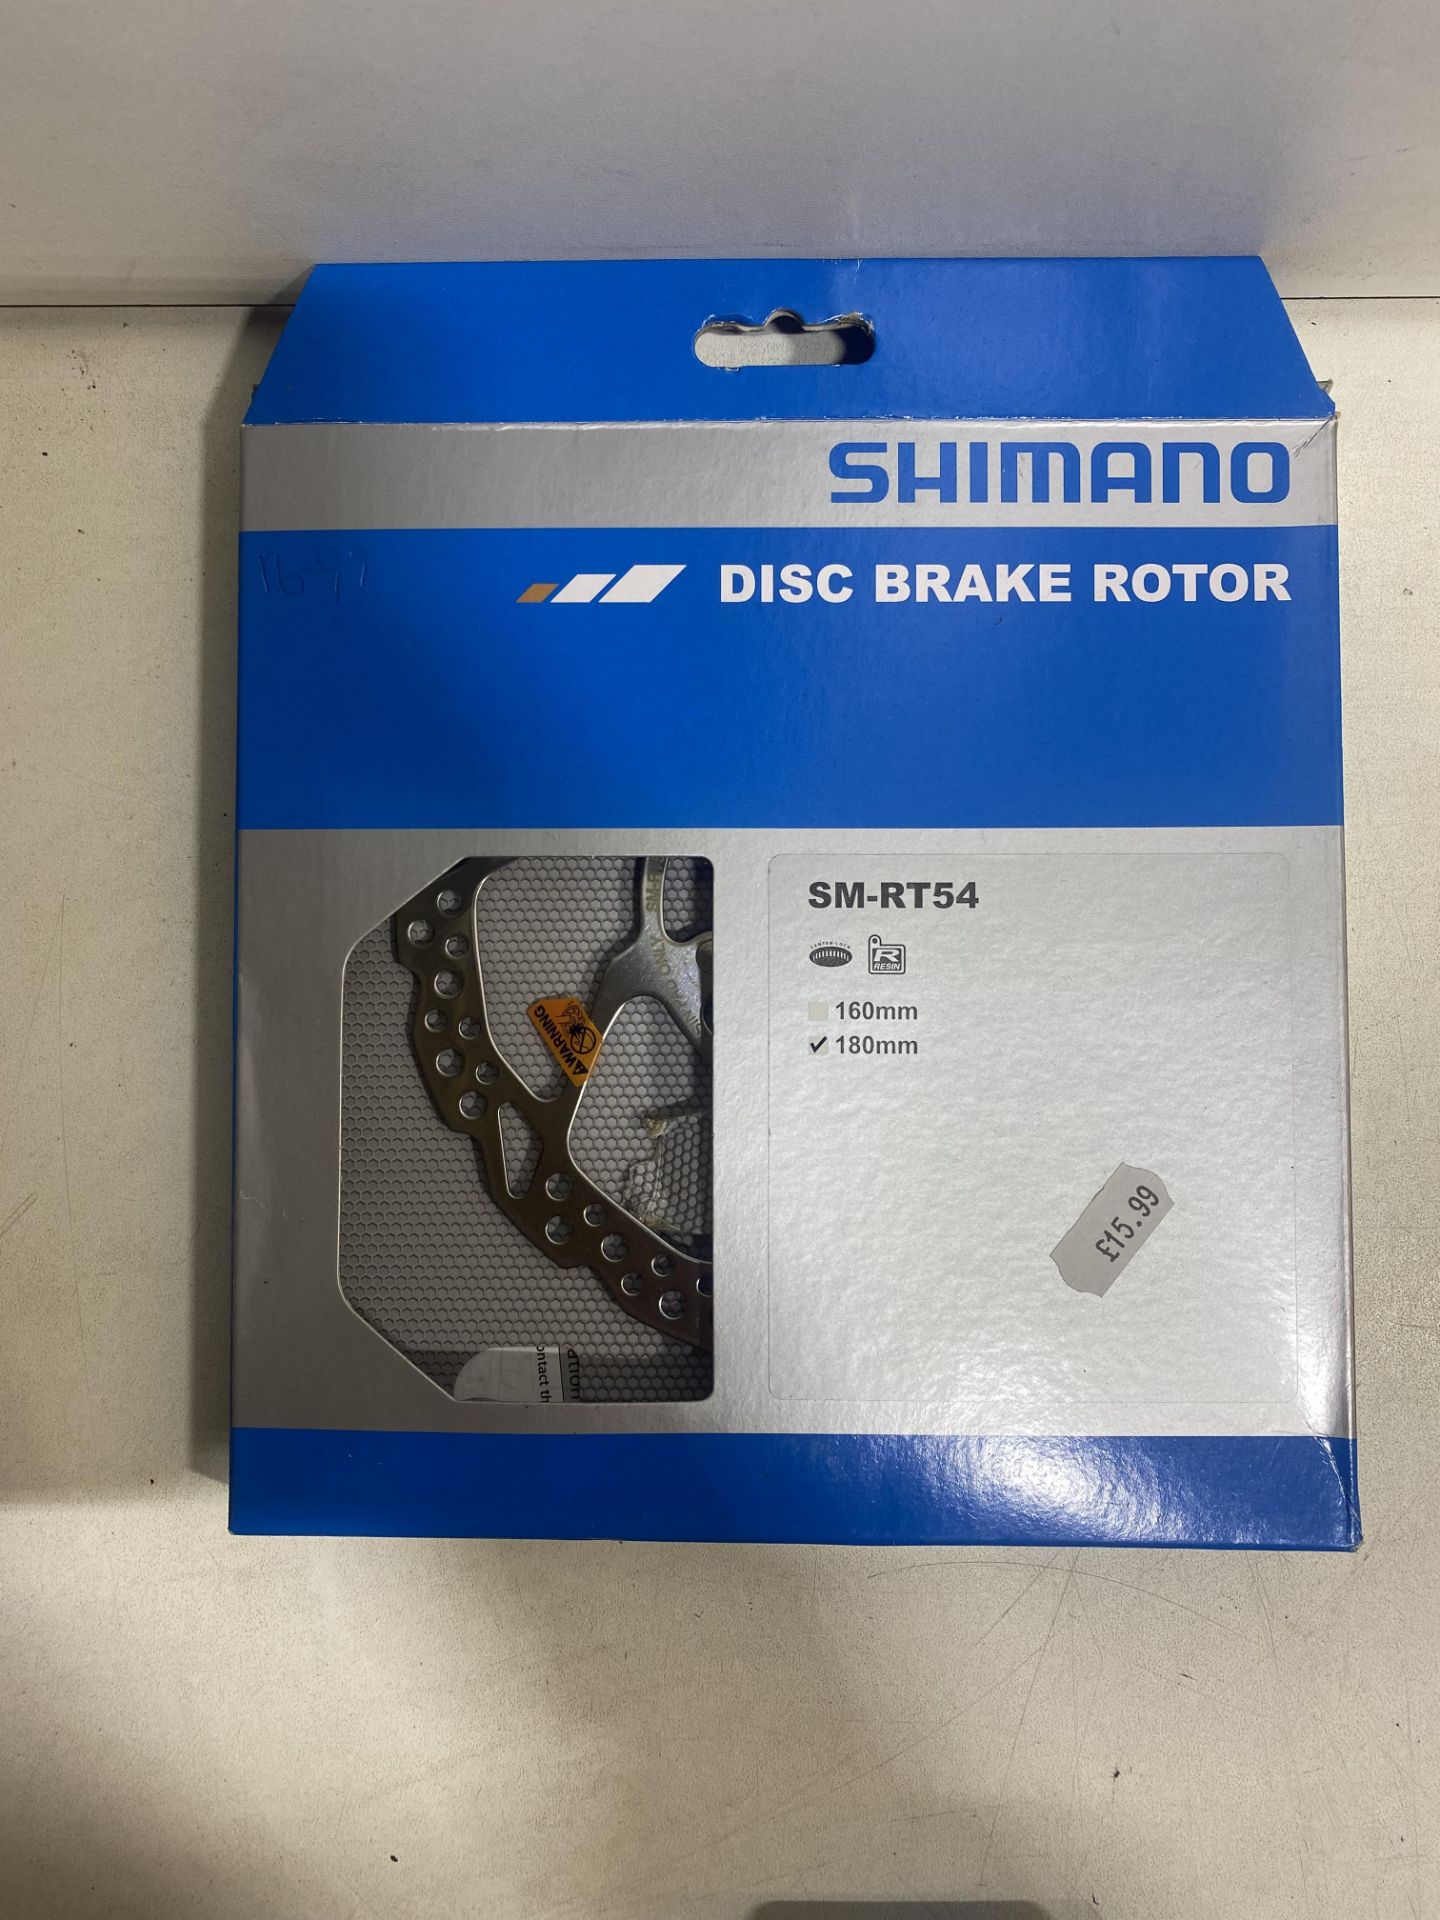 10 x Various Shimano Bike Accessories Including Derailleurs, Bottom Rackets Disk Brake Motors etc. - - Image 2 of 10